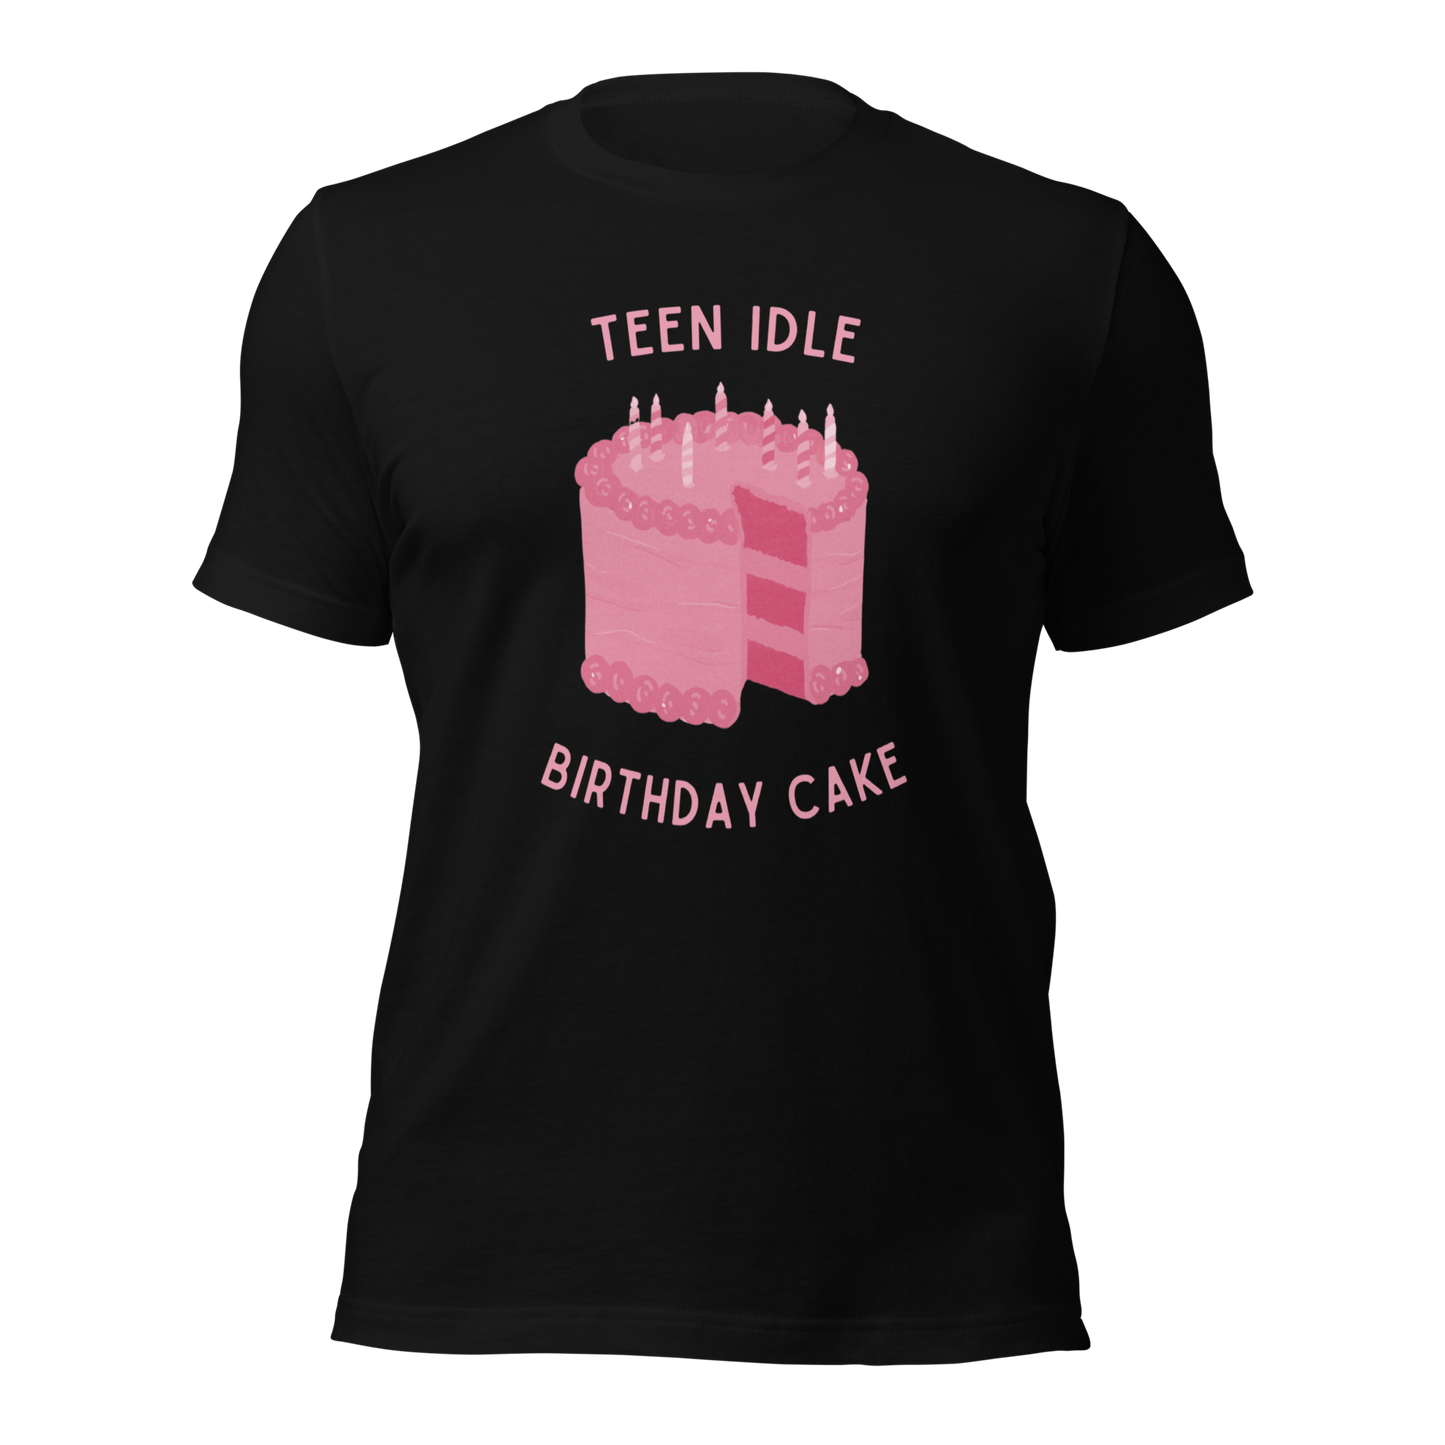 Teen Idle - T-Shirt - Birthday Cake - Unisex